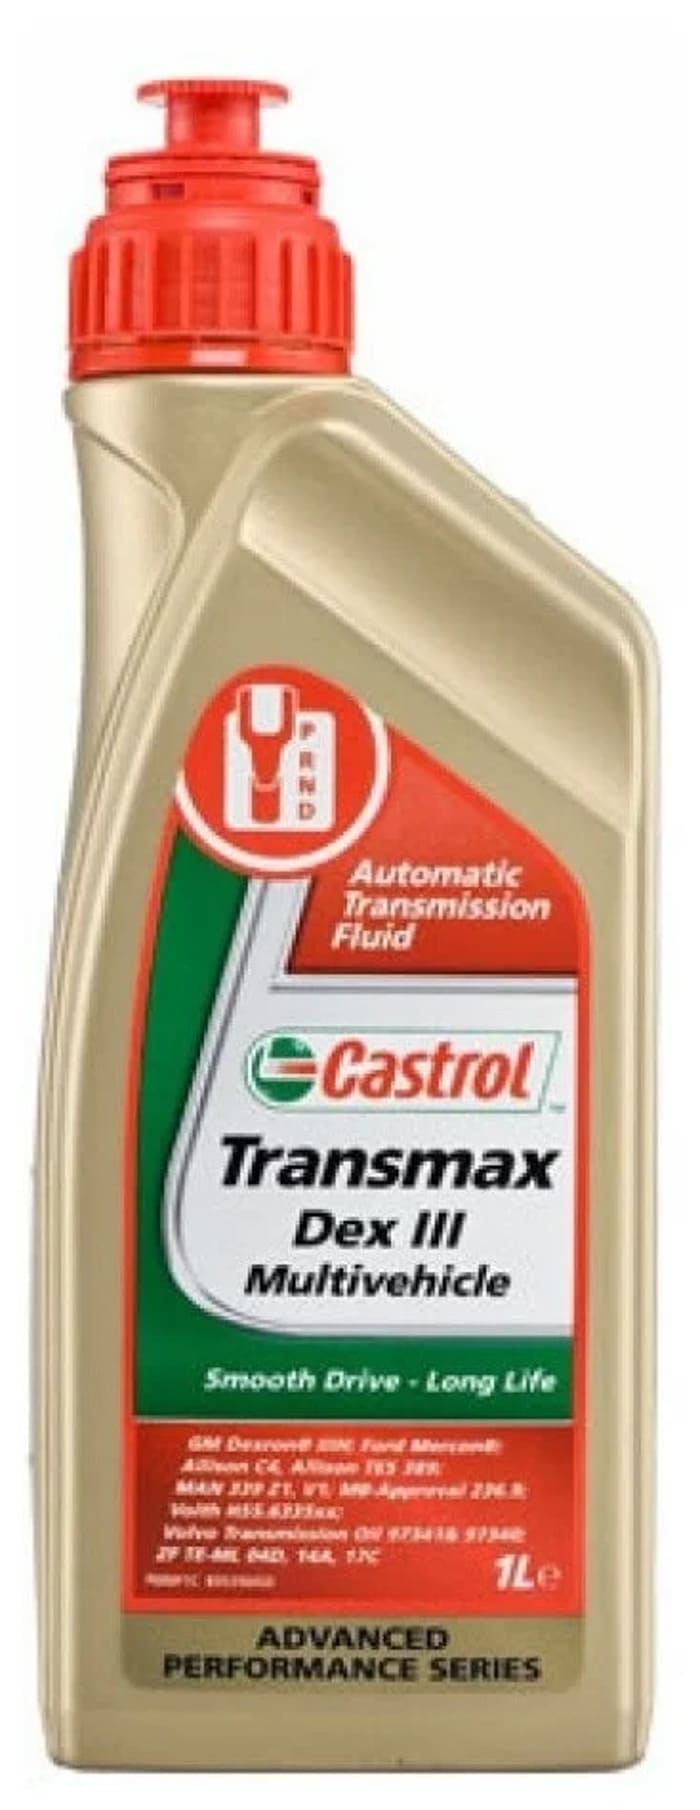 Castrol Transmax ATF Dex/Merc Multivehicle 1л. Castrol Transmax Dex III Multivehicle ATF. 15dd2c масло трансмиссионное Castrol Transmax ATF Dex/Merc Multivehicle 1 л 15dd2c. Масло трансмиссионное Castrol Dex 2.